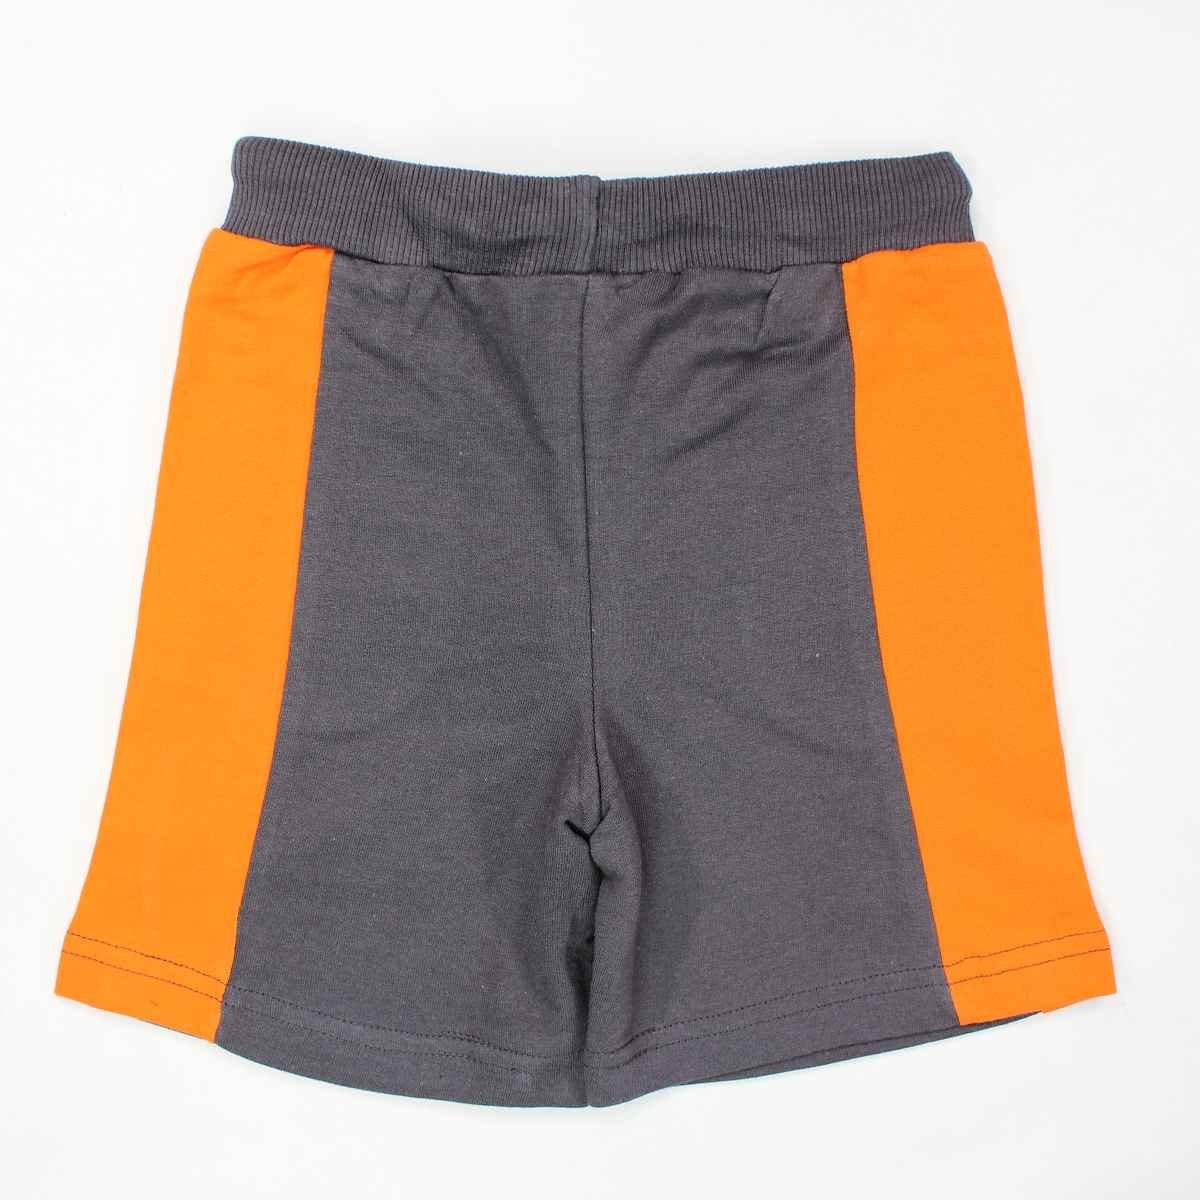 Gr. Naruto 152 110 Kinder Shorts Shippuden Naruto Baumwolle Shorts Grau bis 100% Jungen